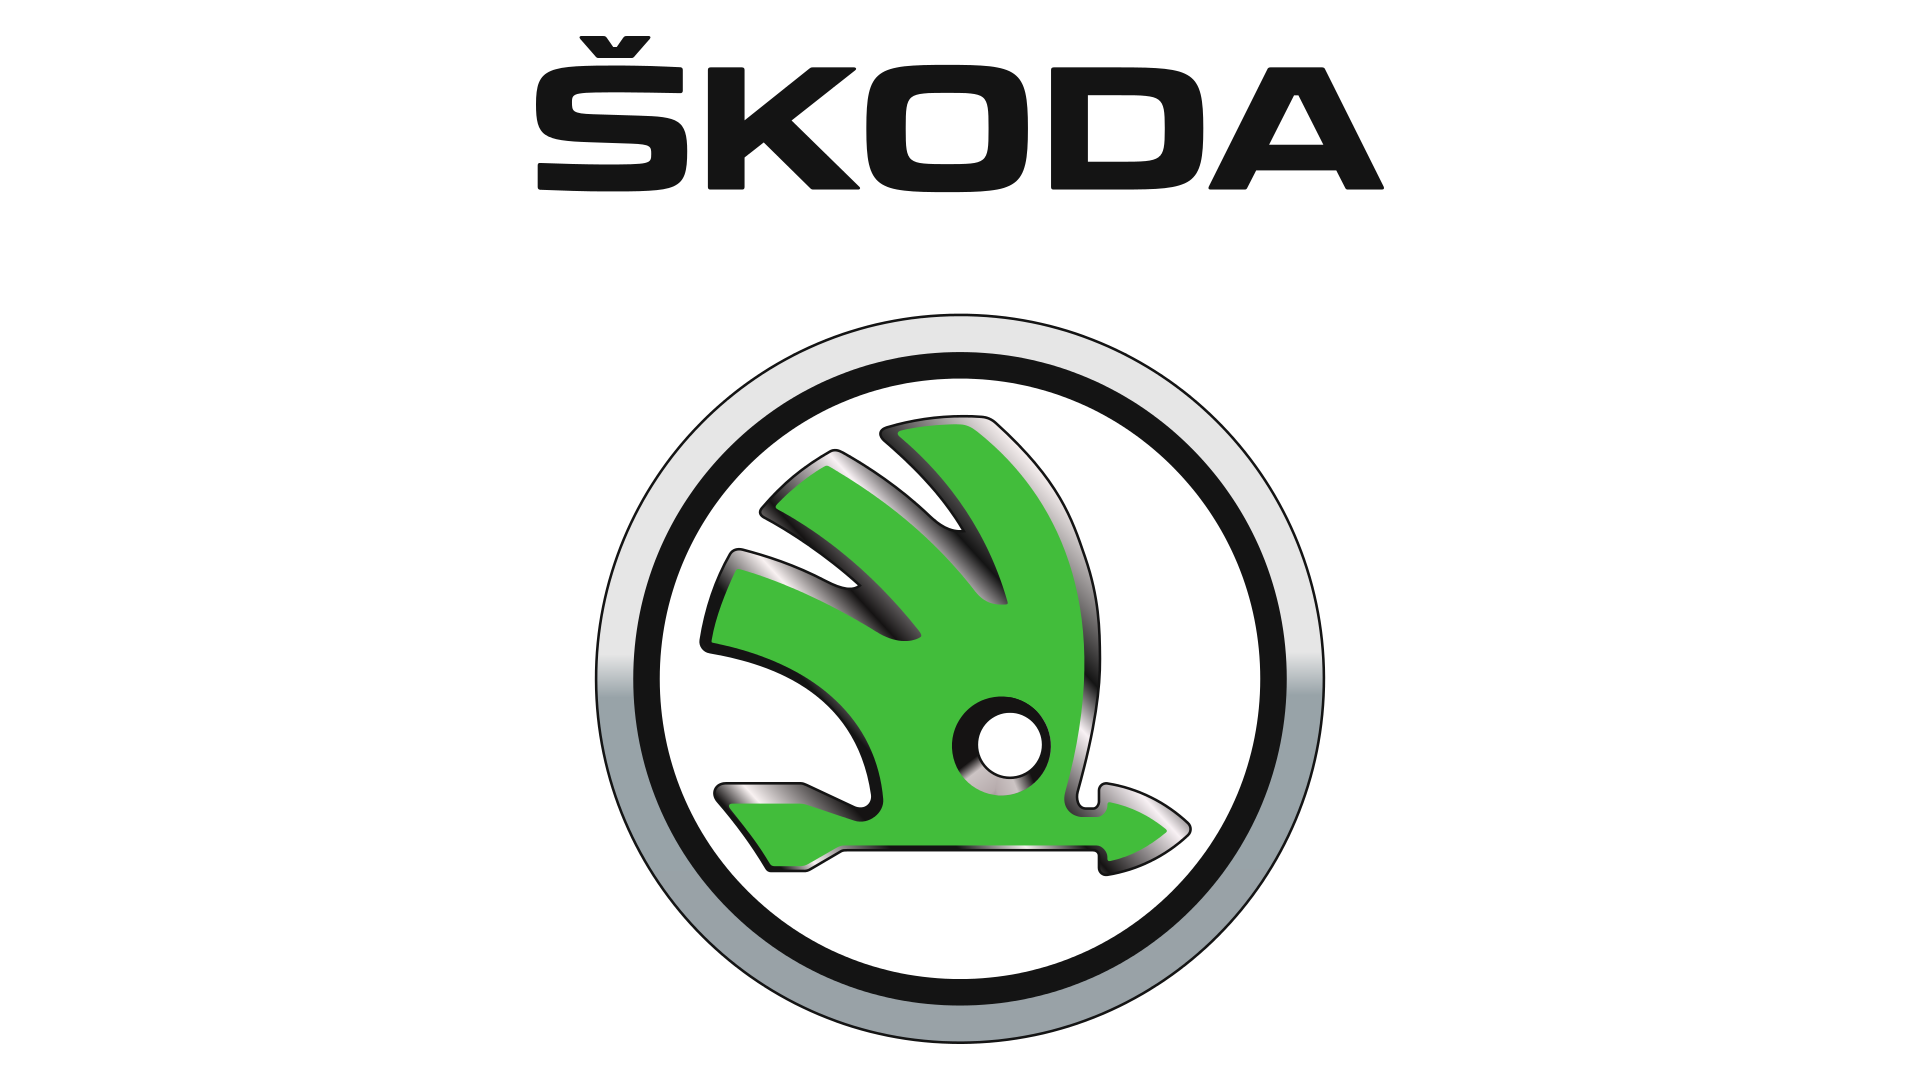 Skoda Emblem 640x480